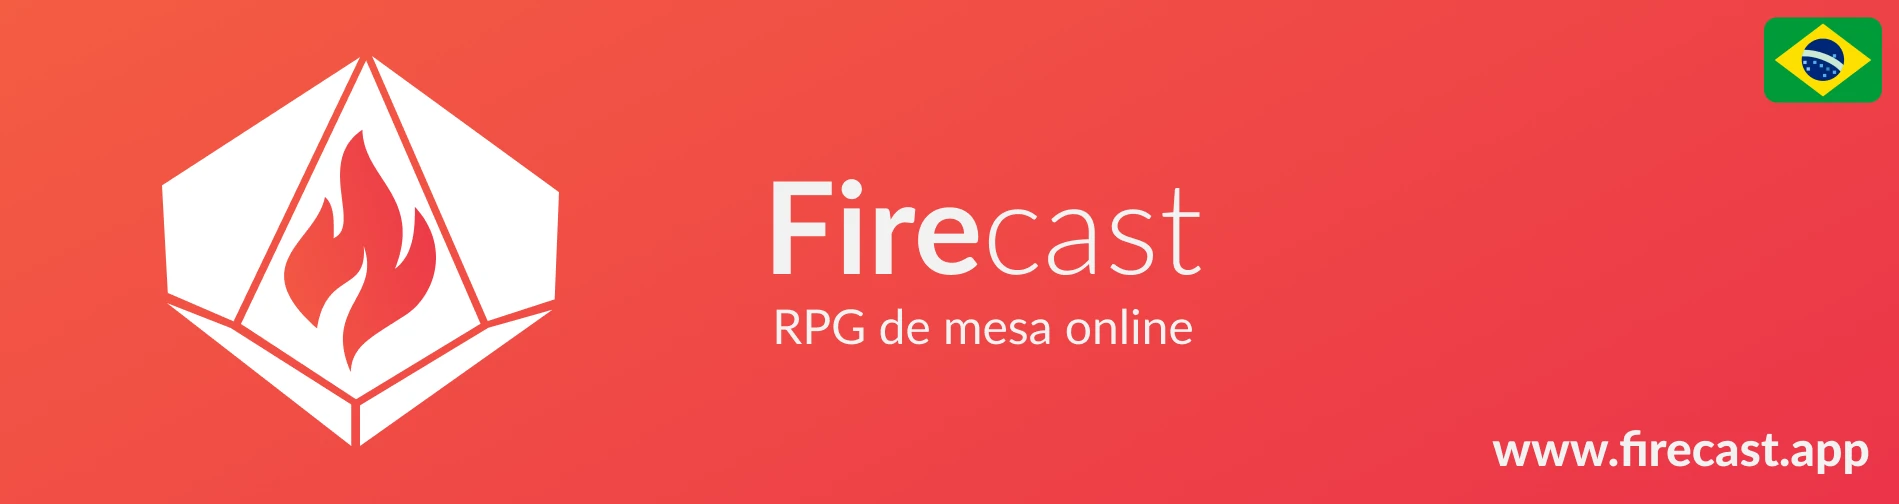 Firecast